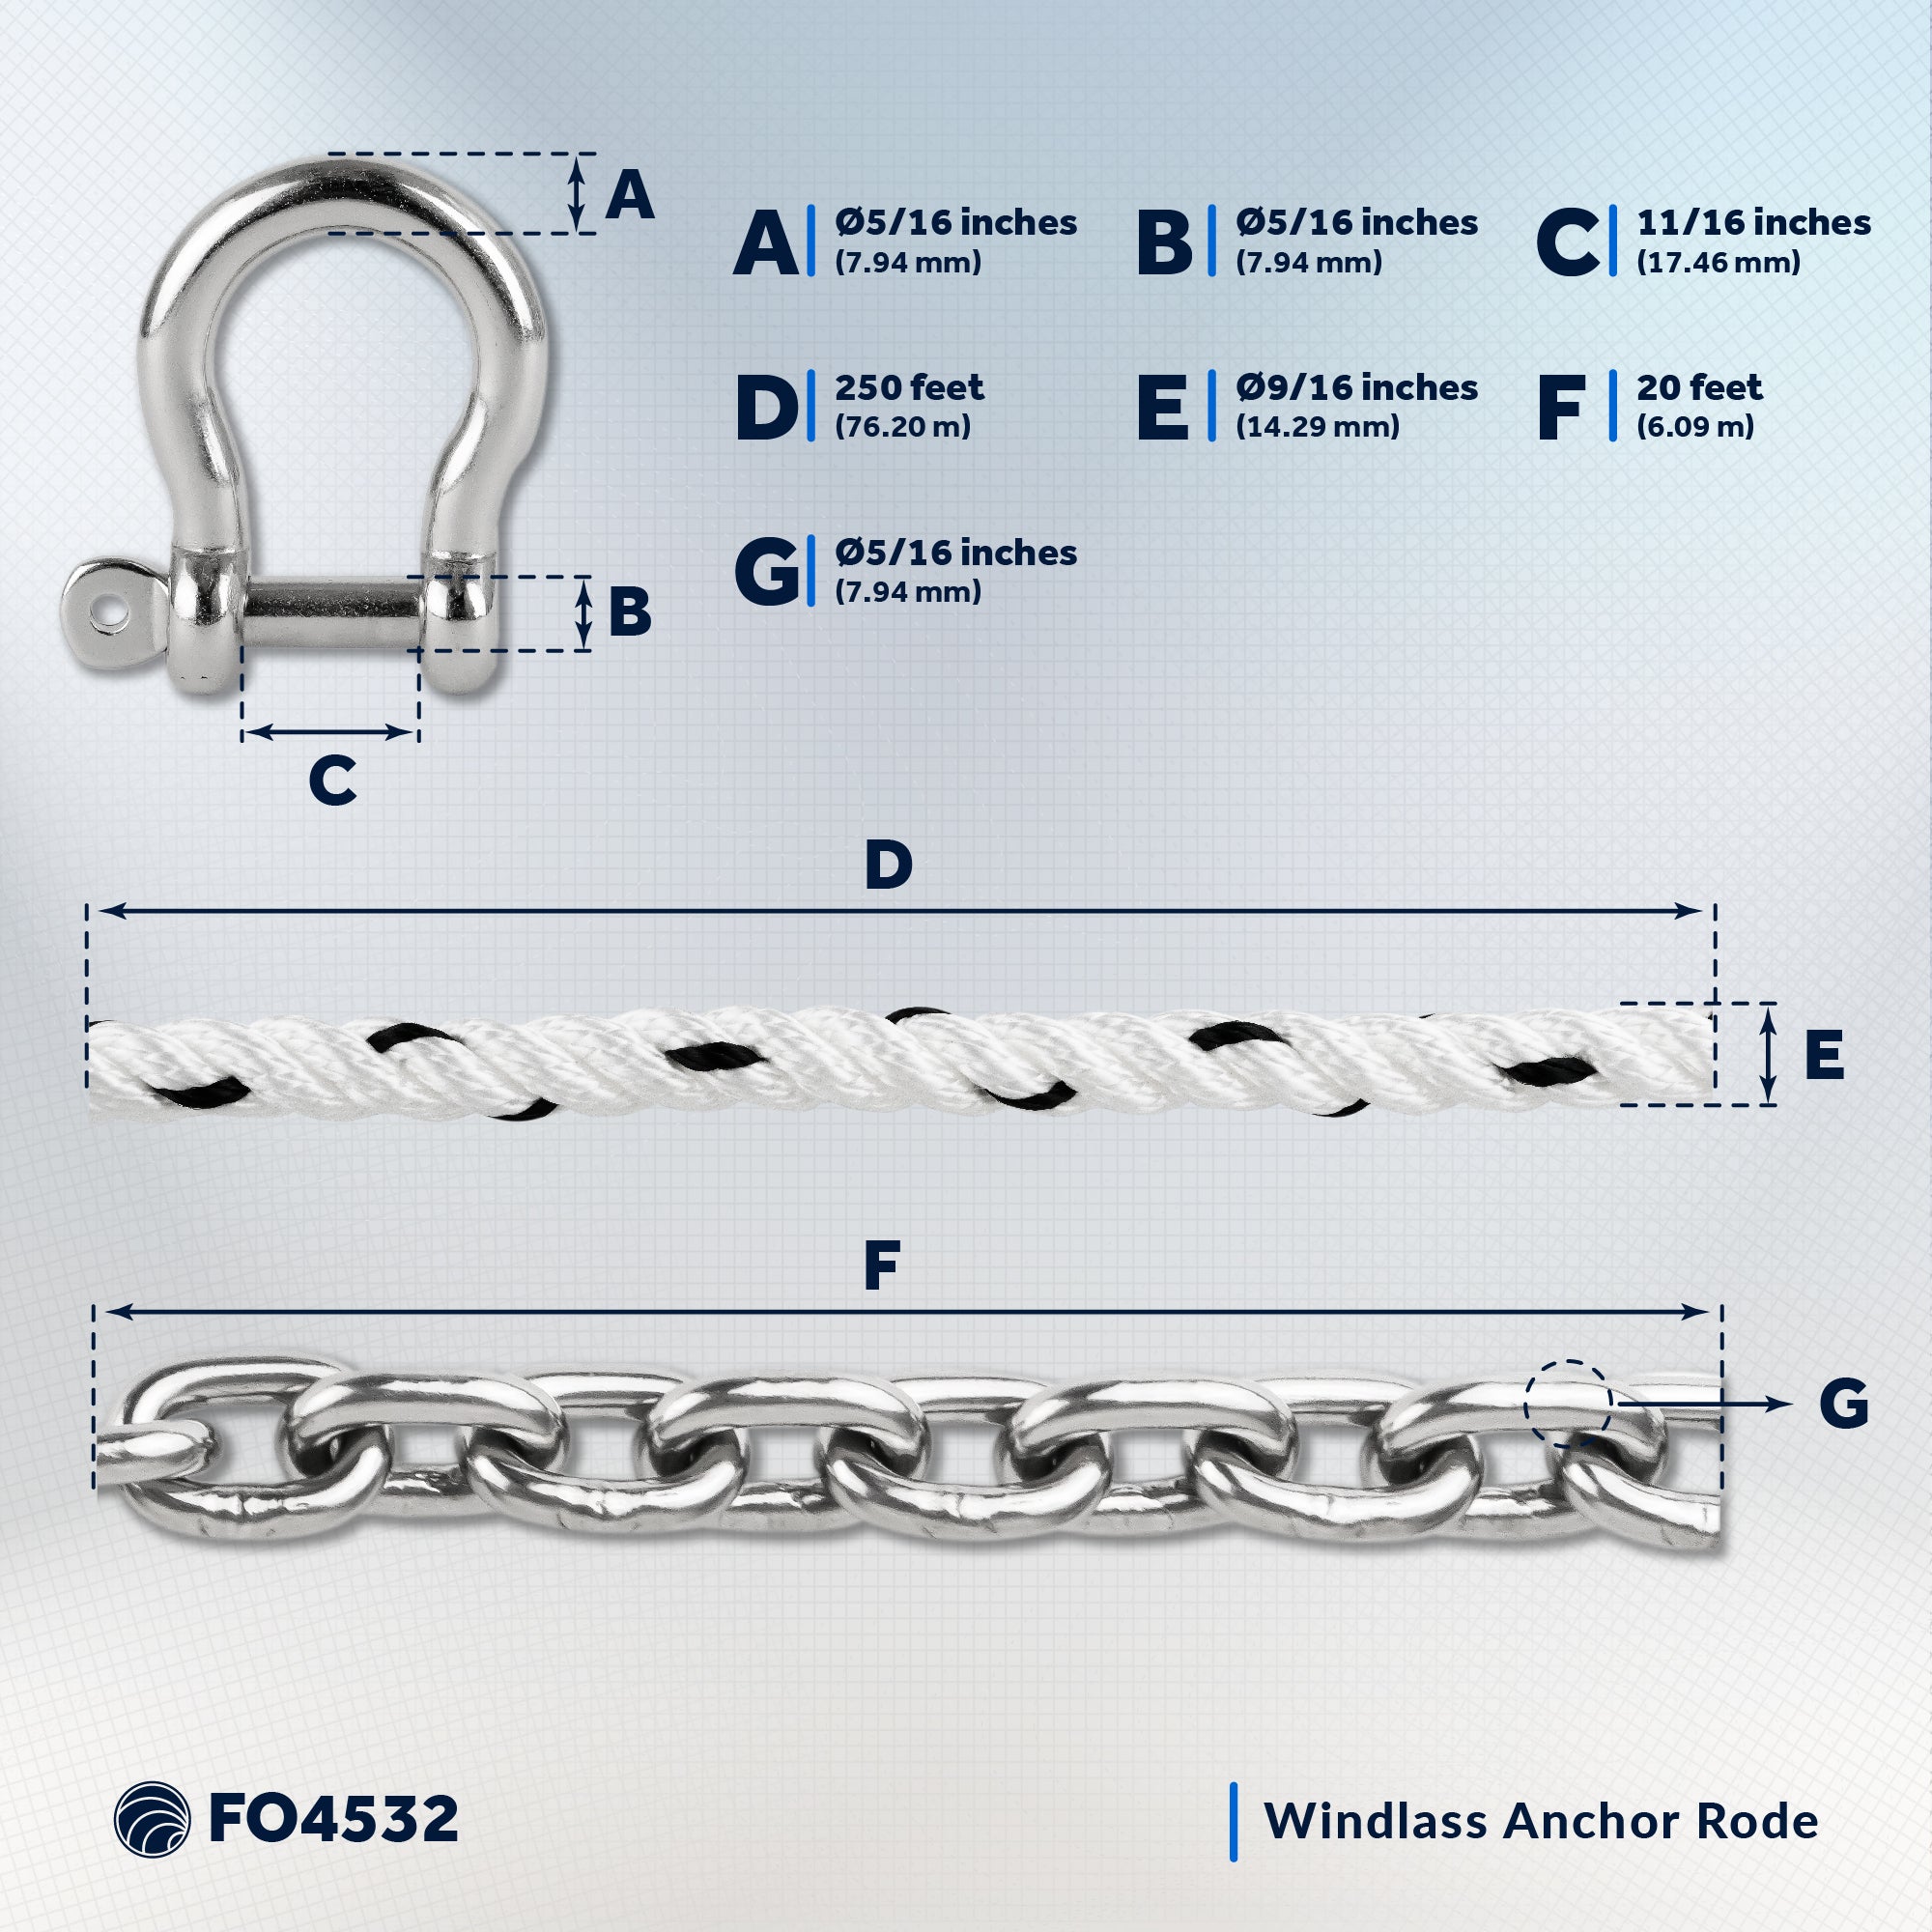 Windlass Anchor Rode, 9/16" x 250' Nylon 3-Strand Rope, 5/16" x 20' G4 Stainless Steel Chain - FO4532